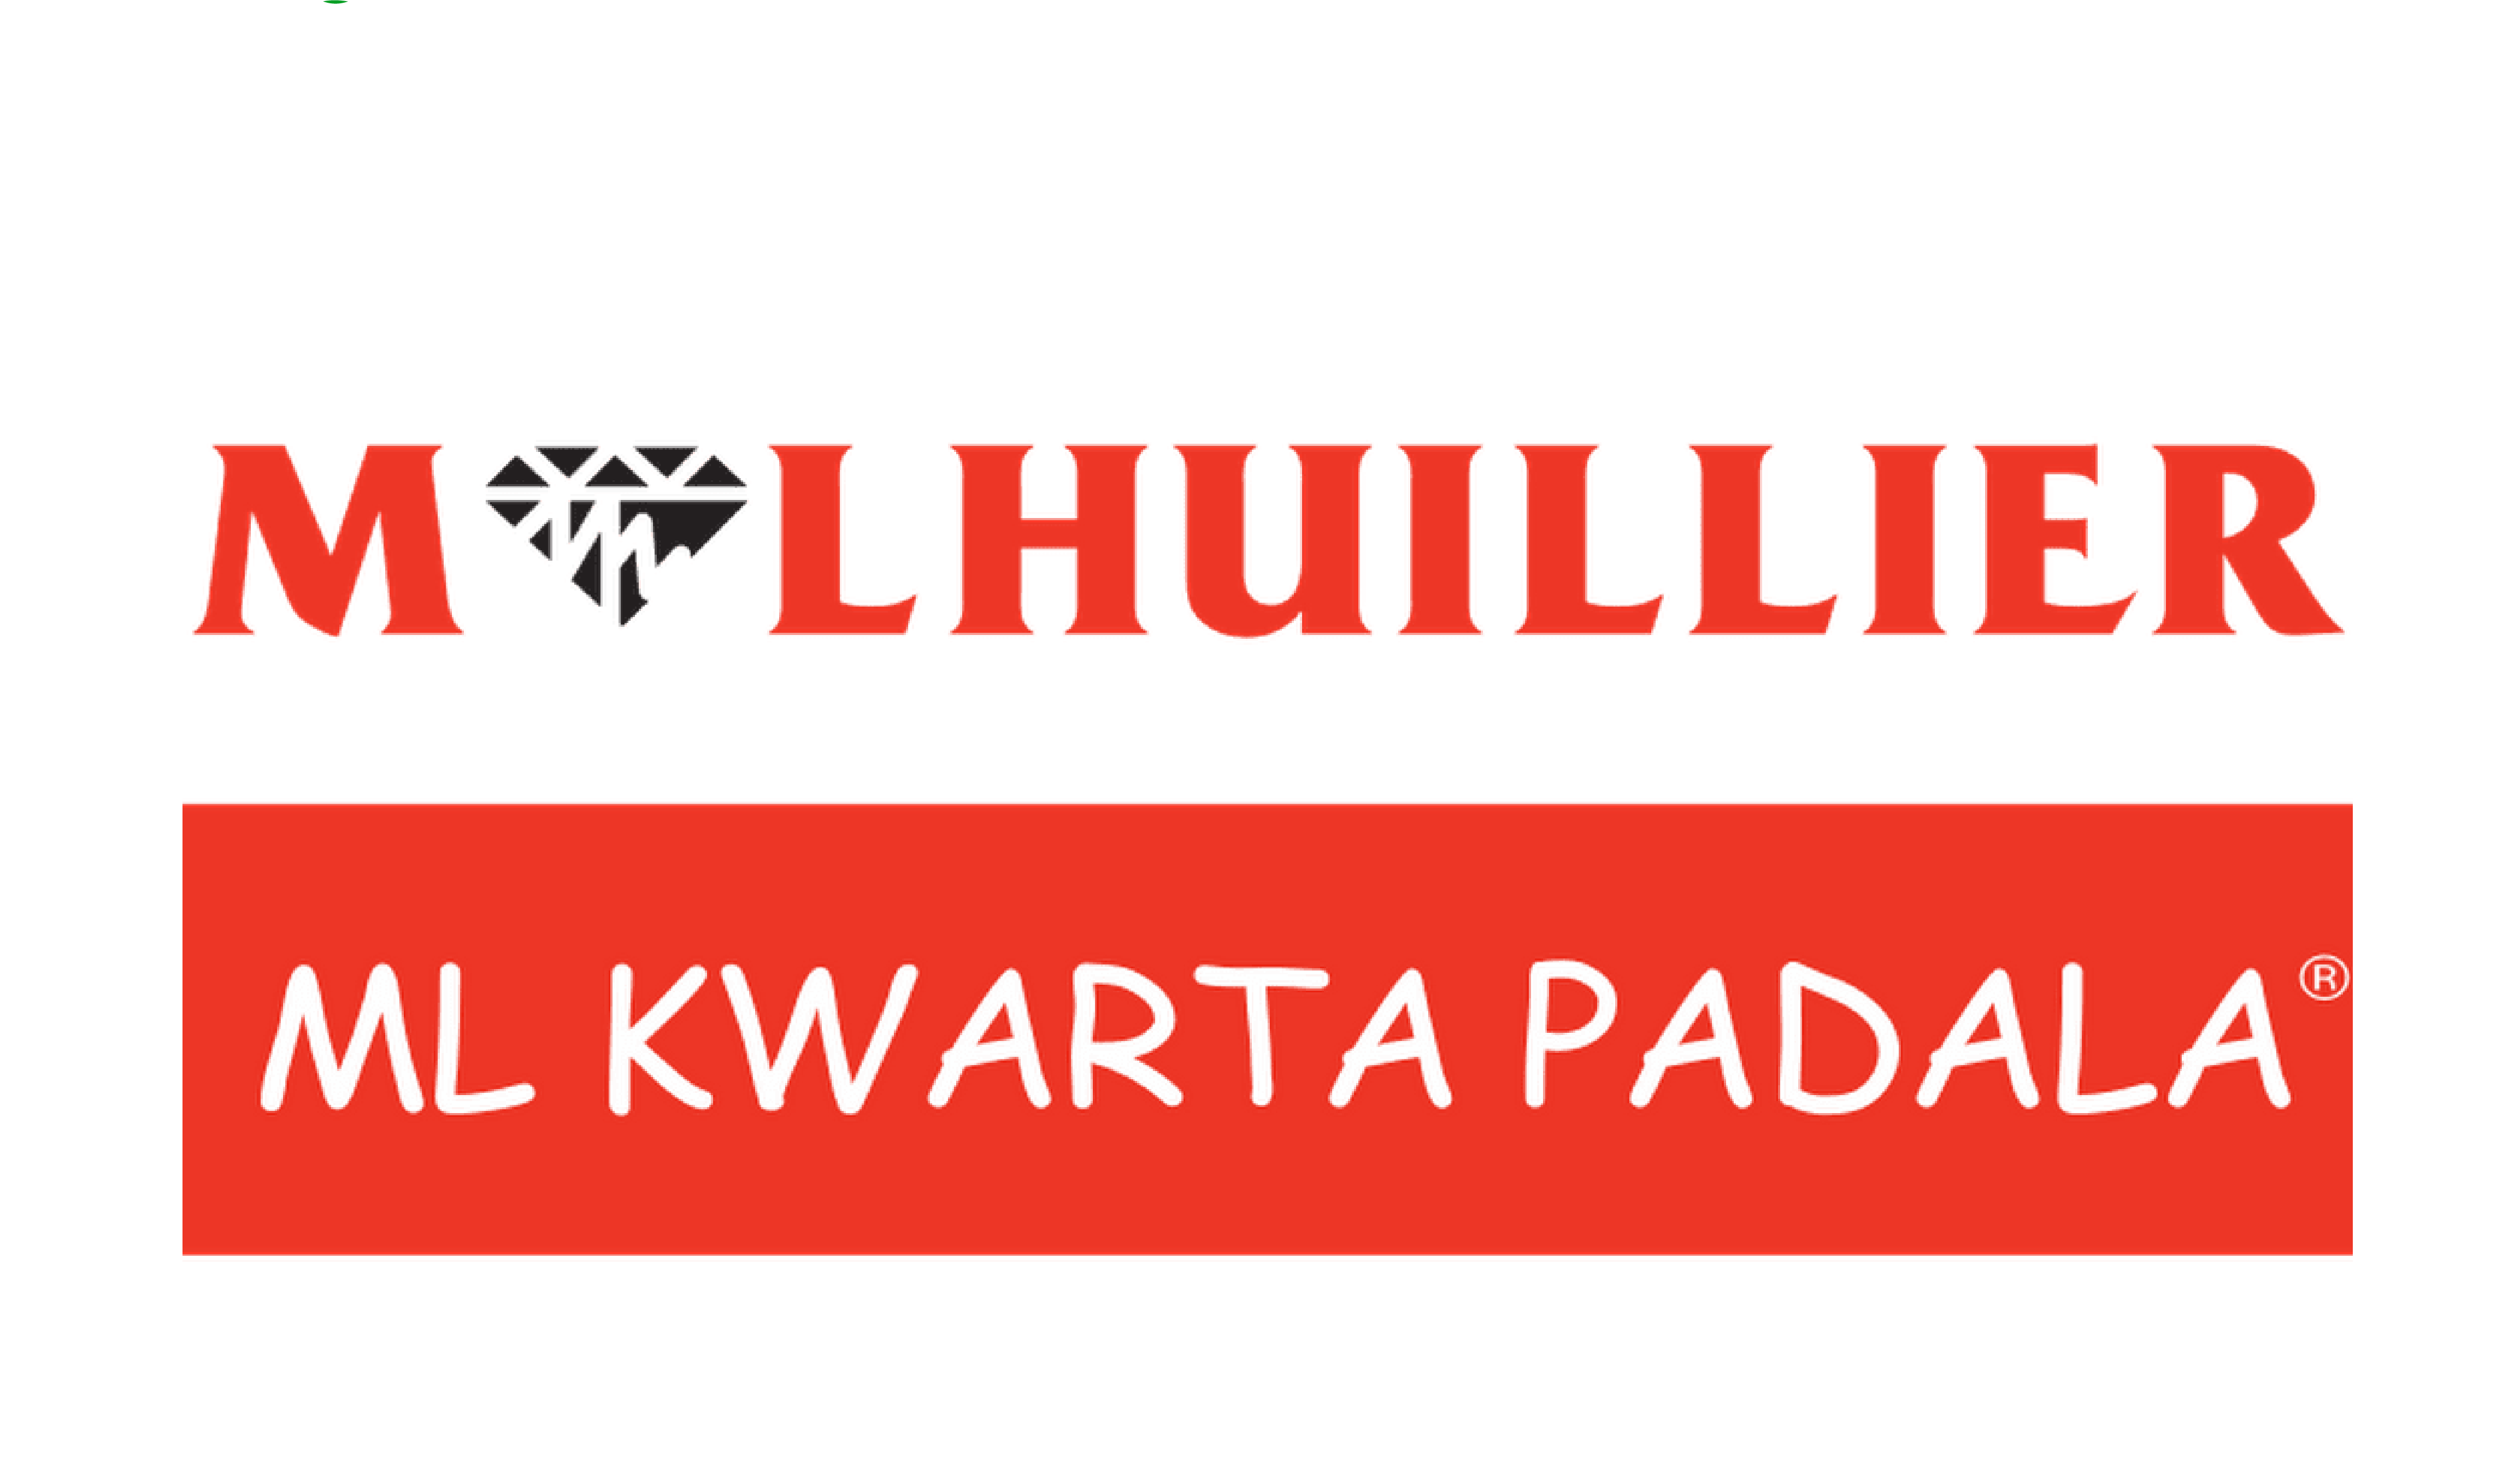 Mlhuillier Pawnshop Network